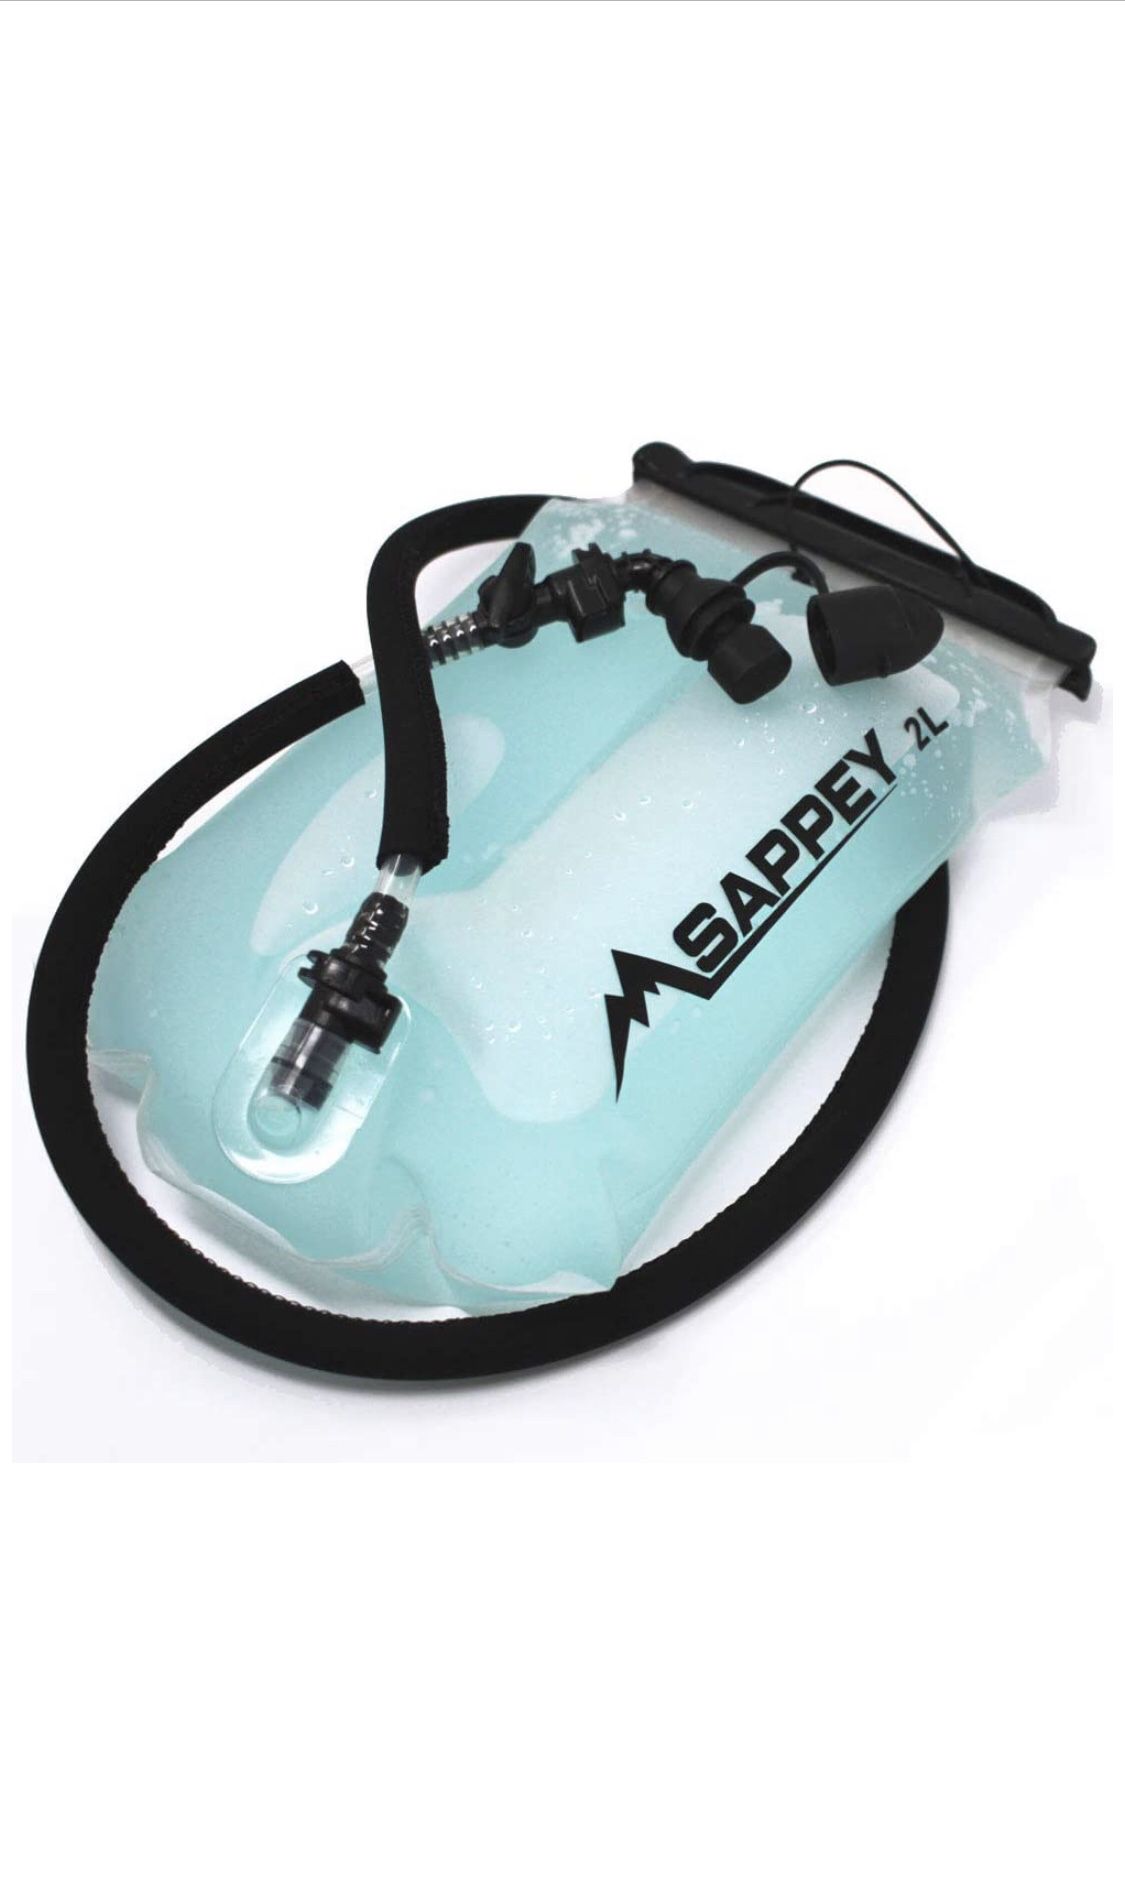 2-Liter Water Bladder for Backpacks, TPU Black Reservoir with 1 Extra Valve and Neoprene Protection, Hydration Bladder for Running, Biking, Camping o